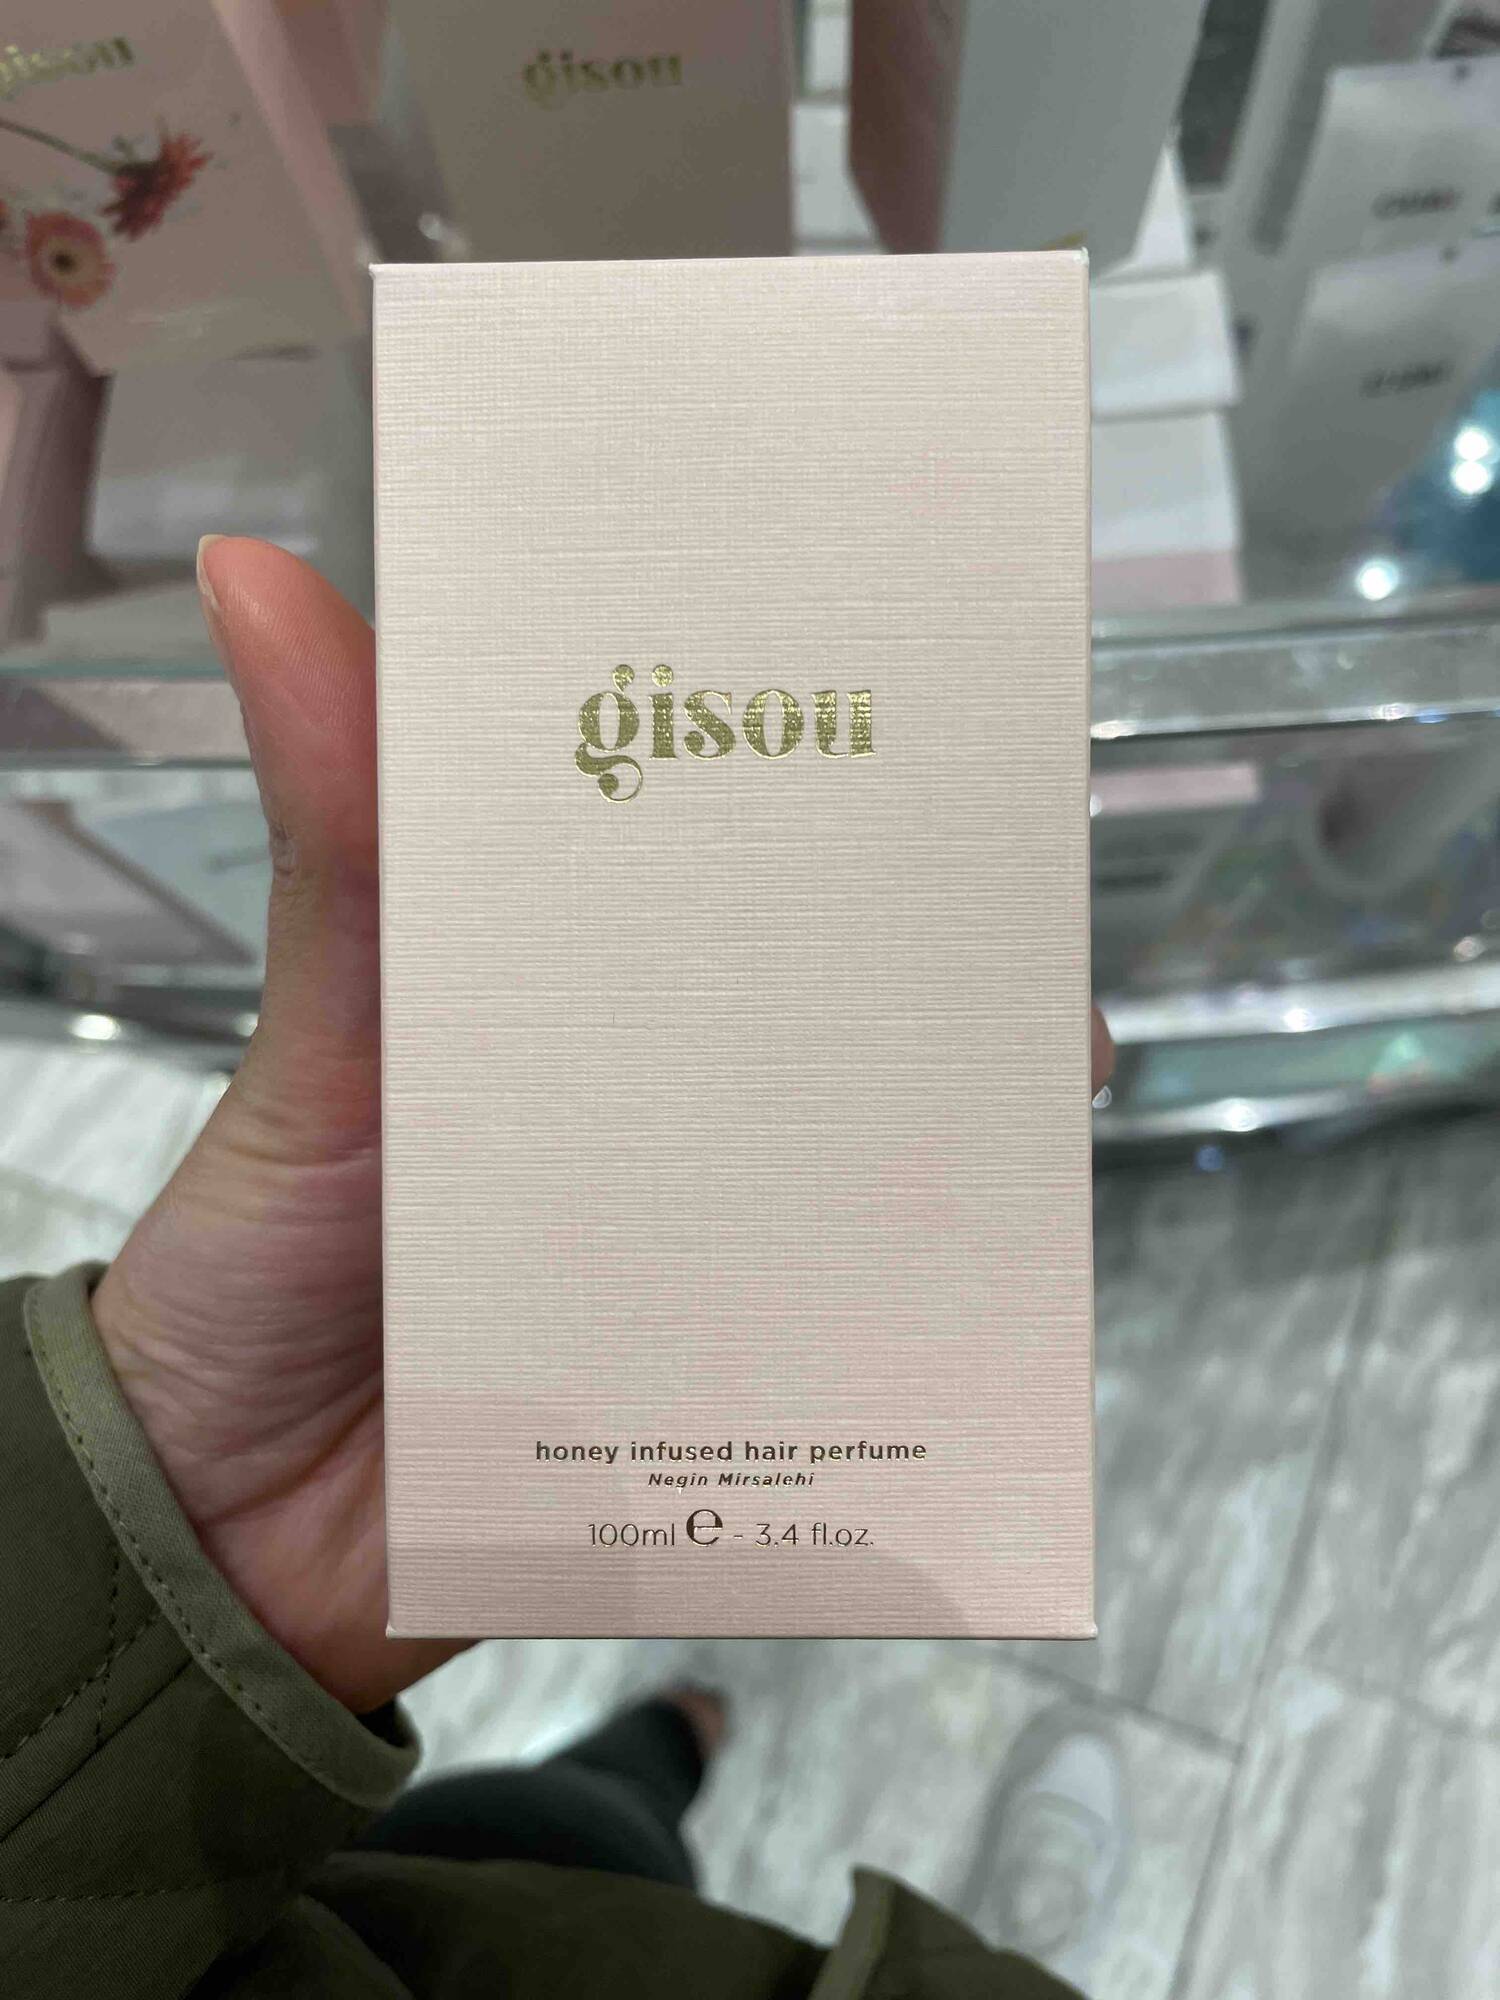 GISOU - Honey infused hair perfume